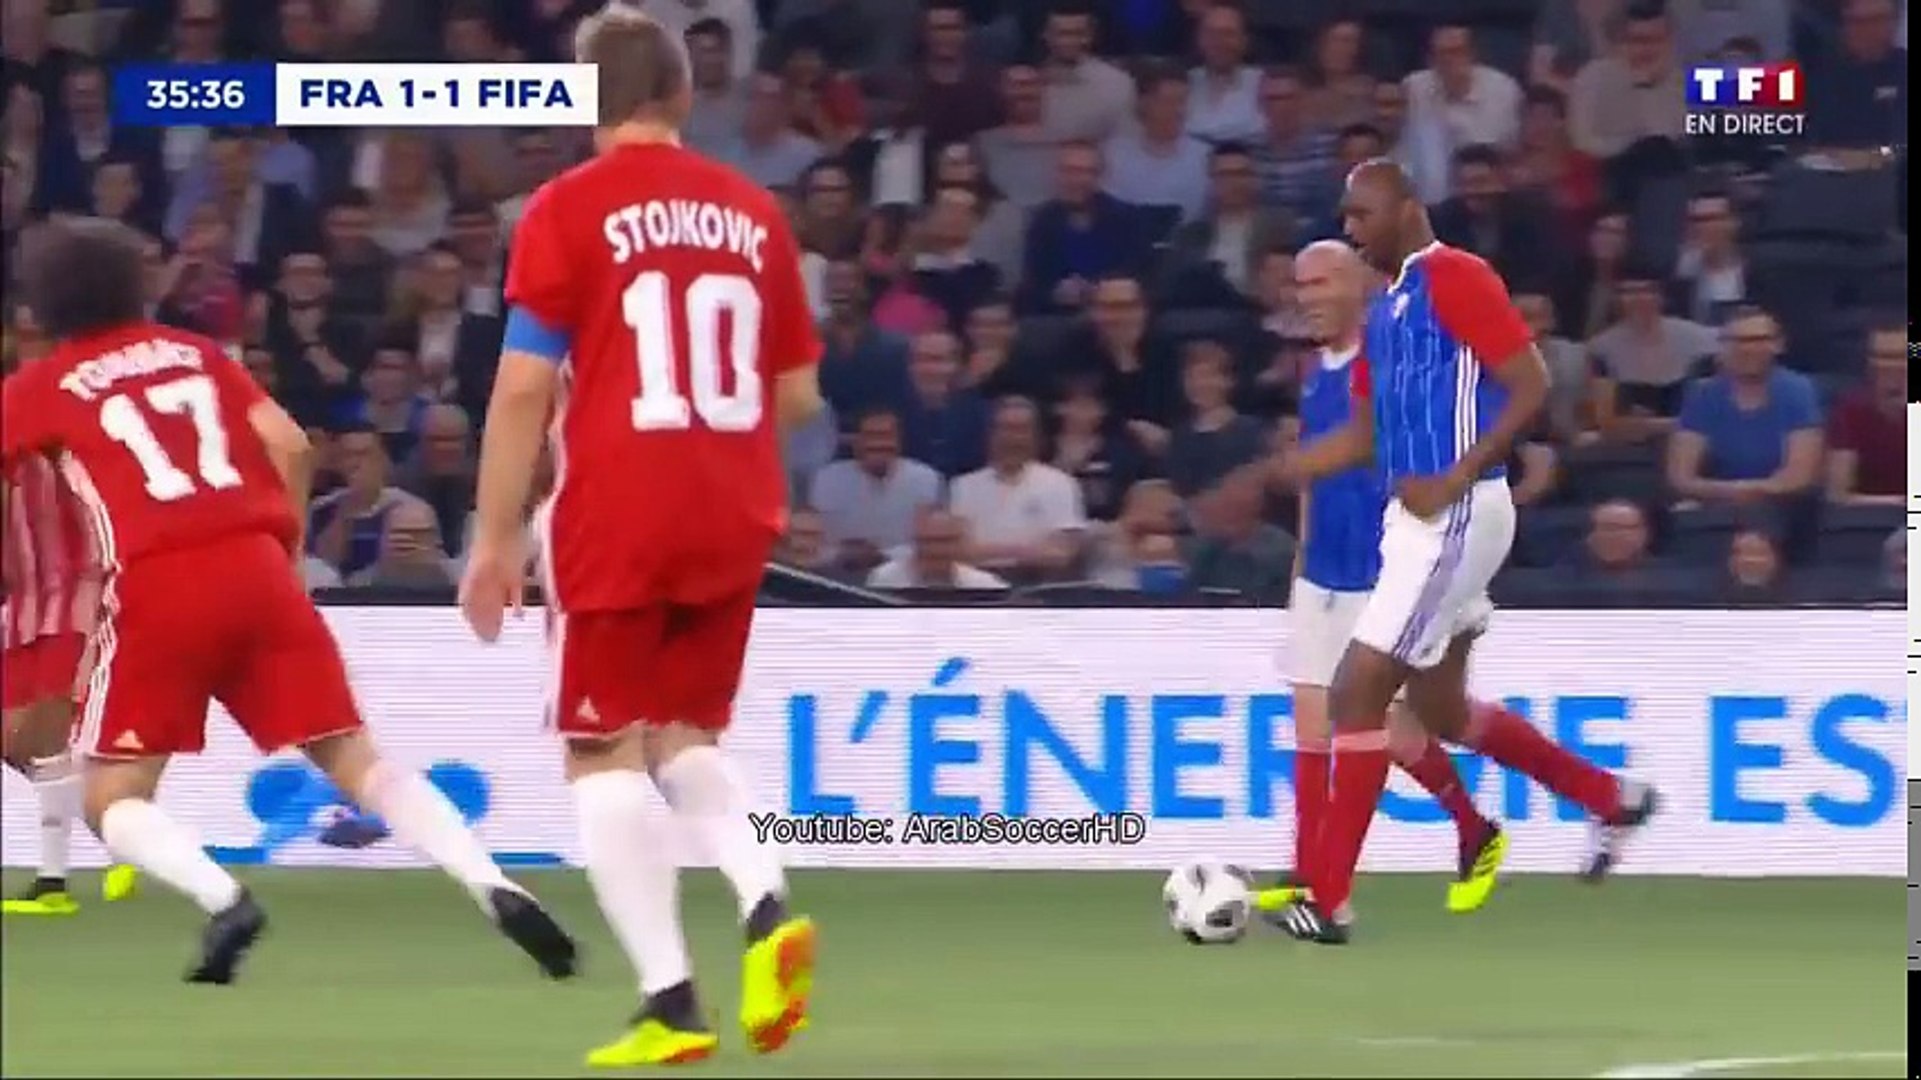 Résumé : France 98 vs FIFA 98 (12/06/2018) - Vidéo Dailymotion